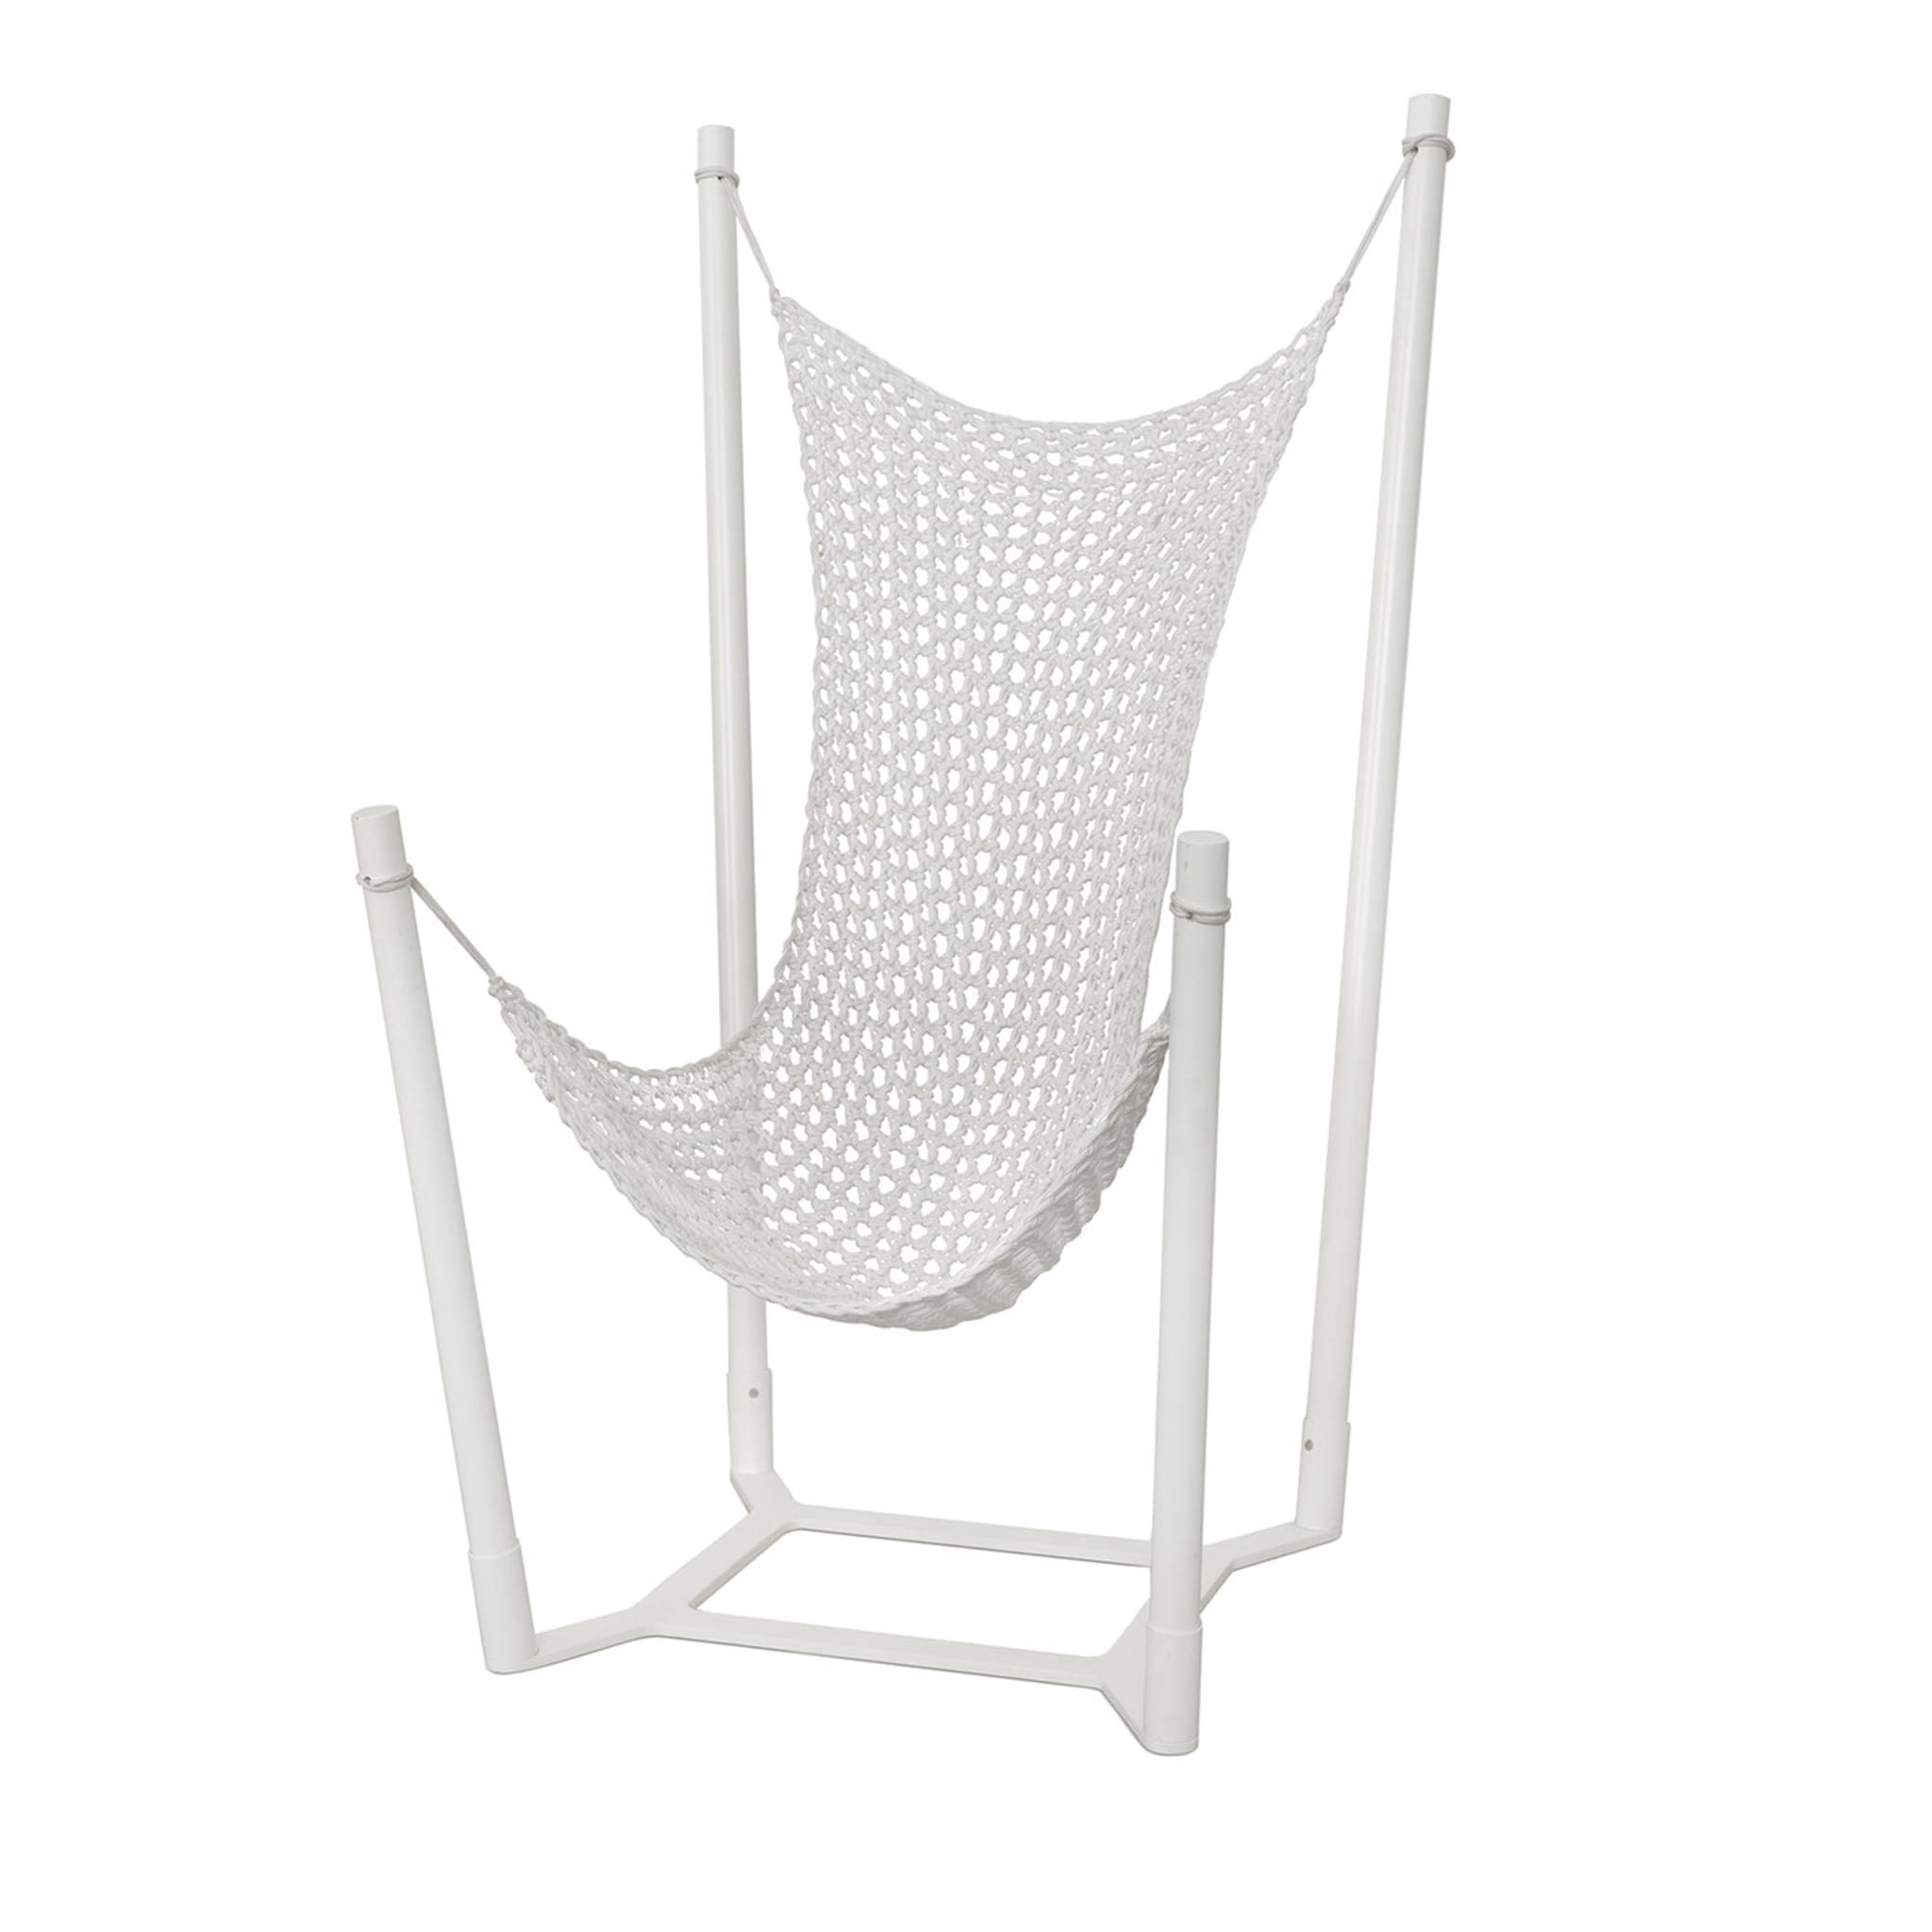 Allegra White Hammock Chair  - Main view